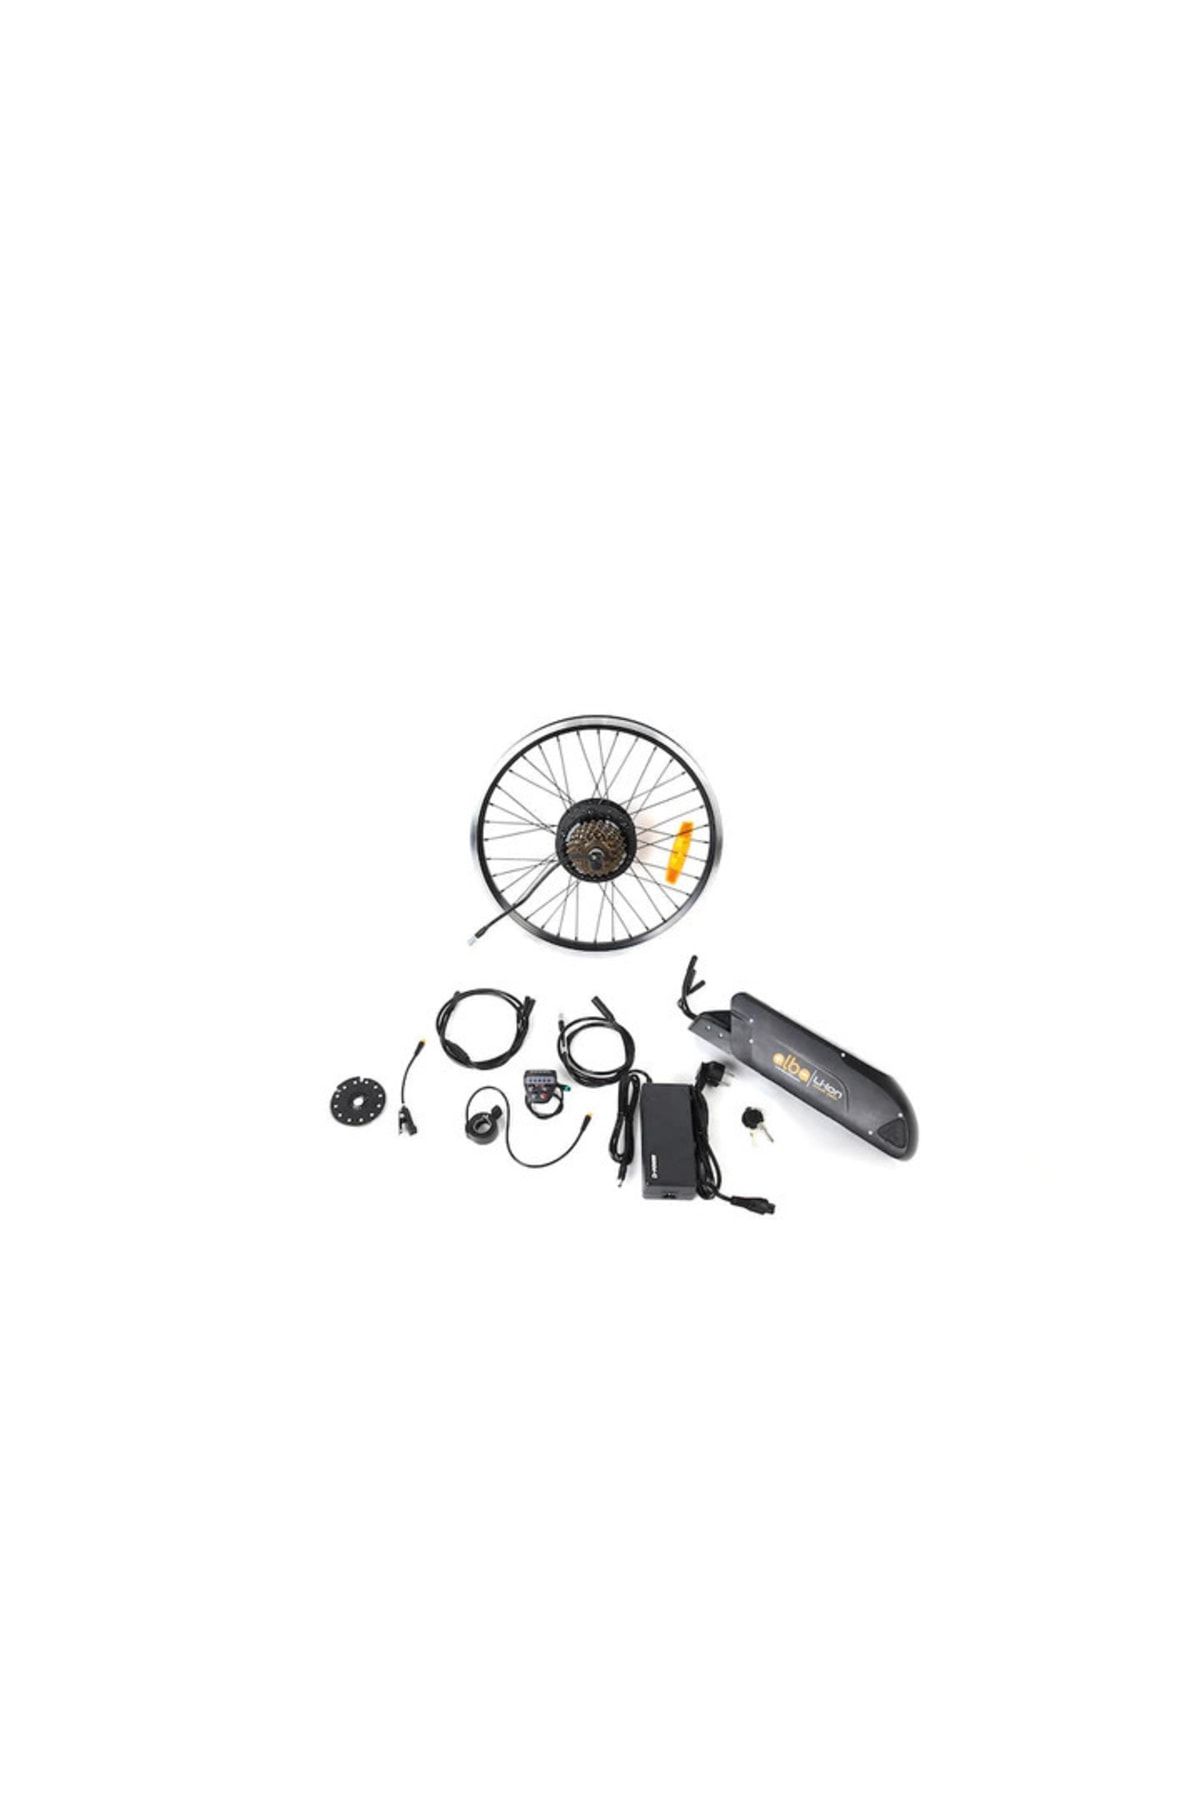 Alba 250rh Pro Elektrikli Bisiklet Kiti 250w 12.8ah (614wh) 29 Jant Disk Fren 48v